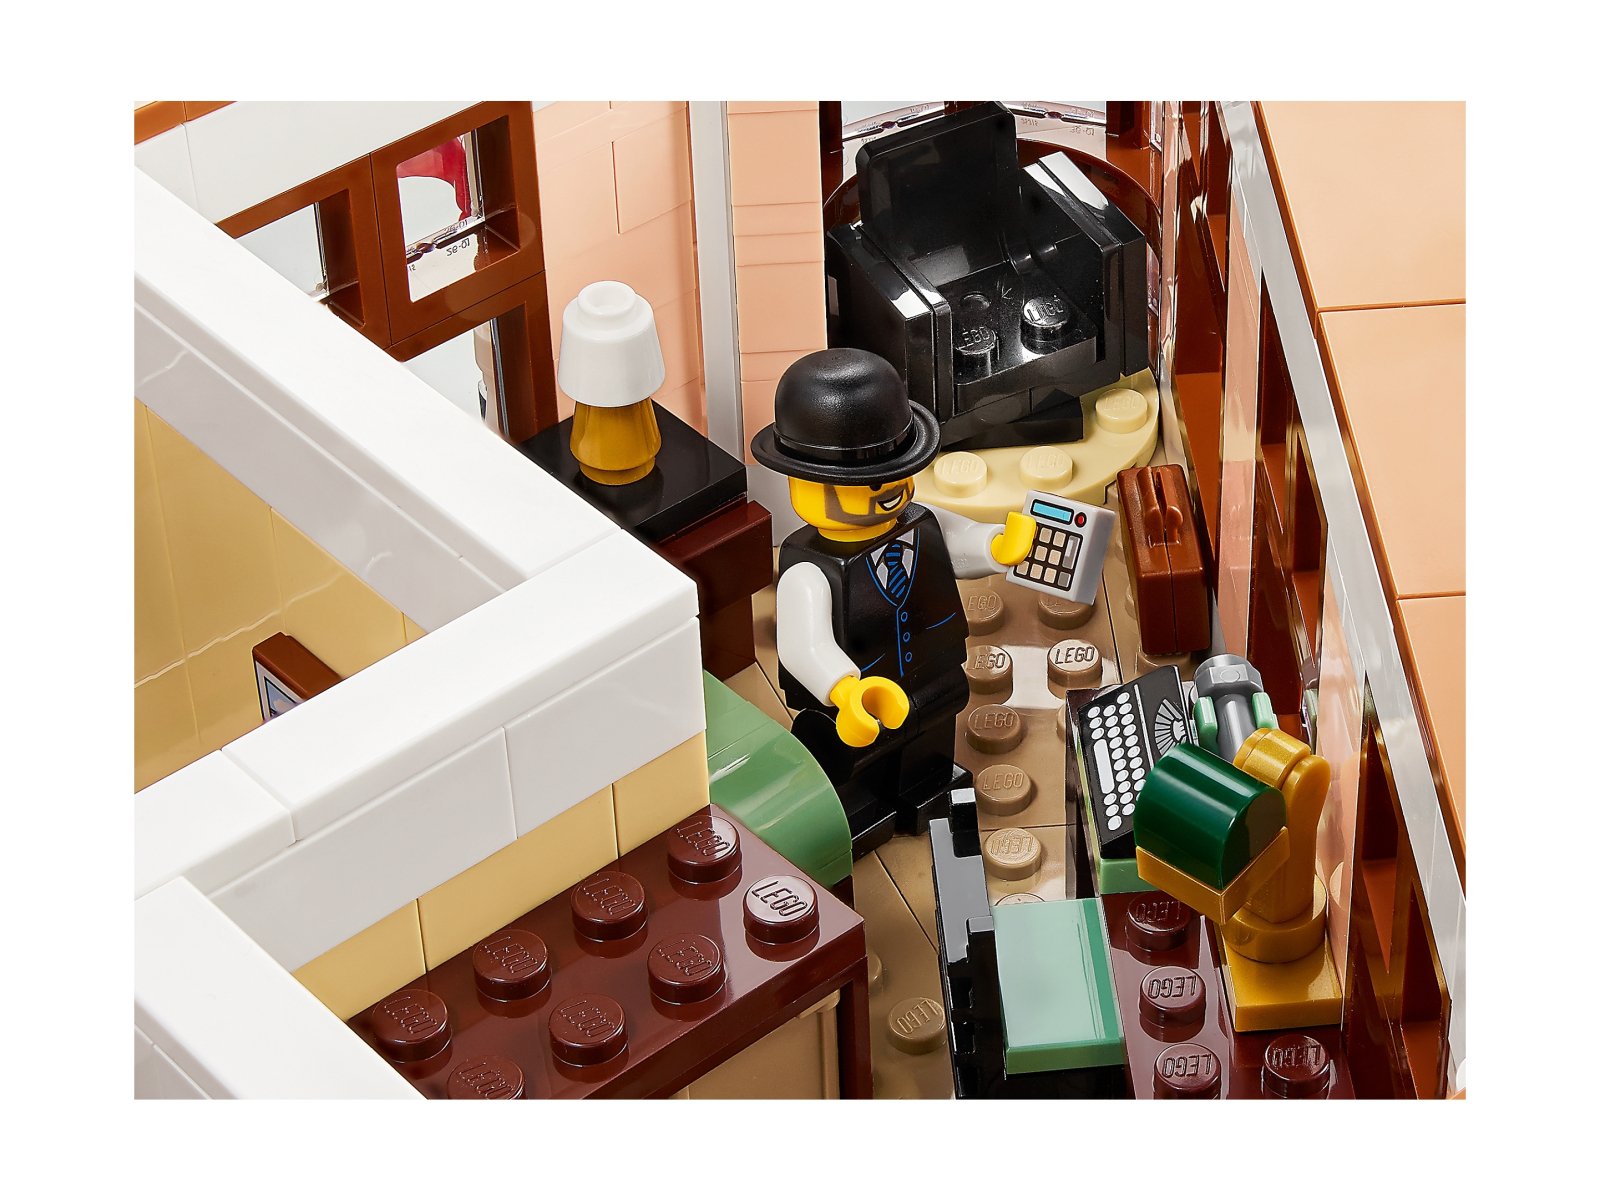 LEGO Hotel butikowy 10297